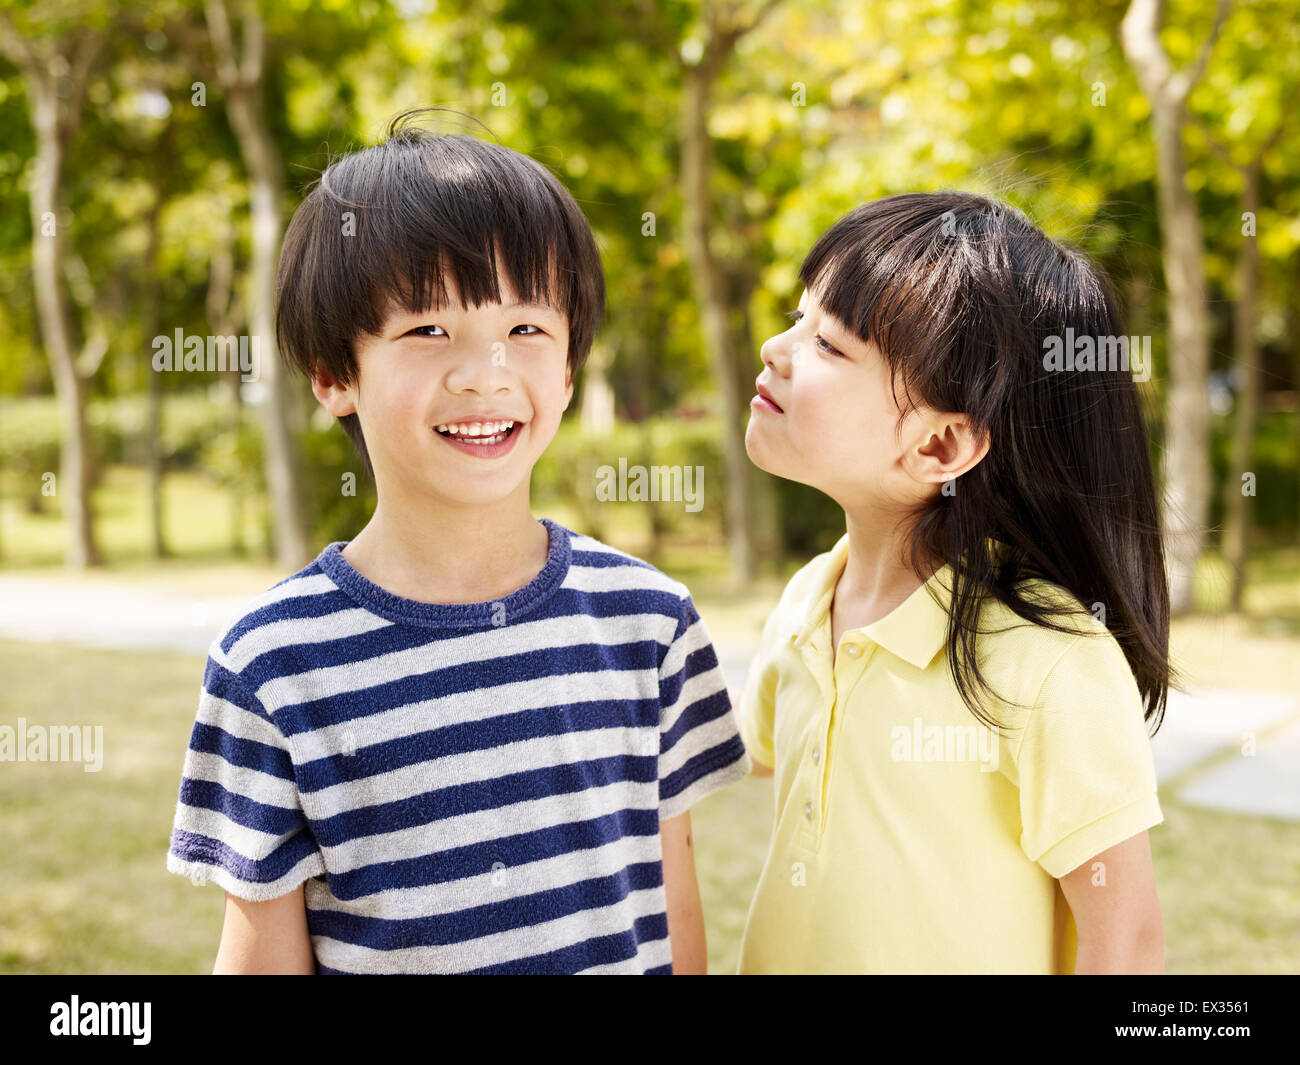 playful asian children. Stock Photo